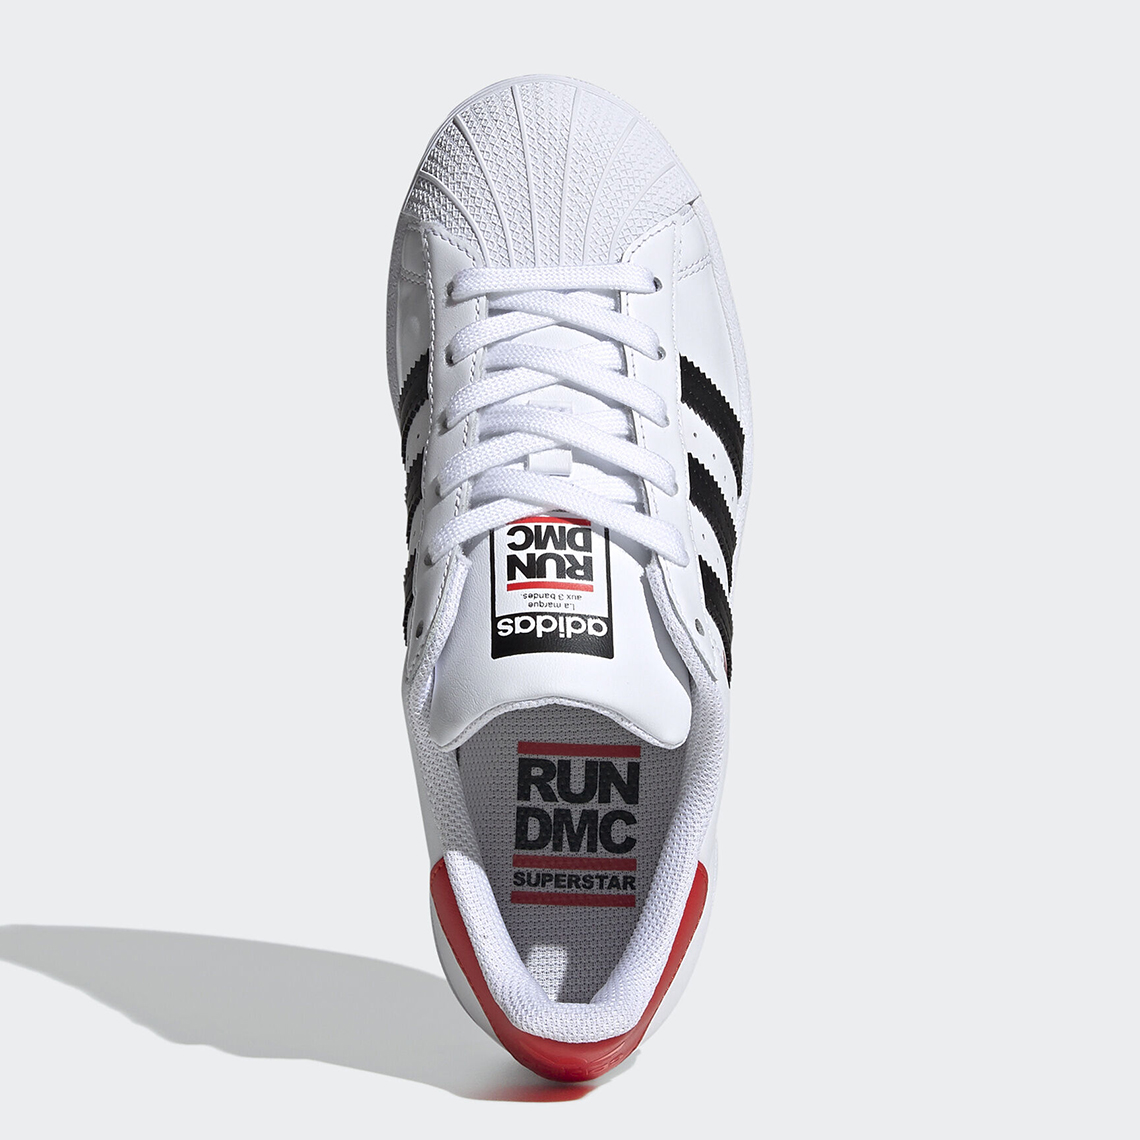 run-dmc-adidas-superstar-white-red-3.jpg